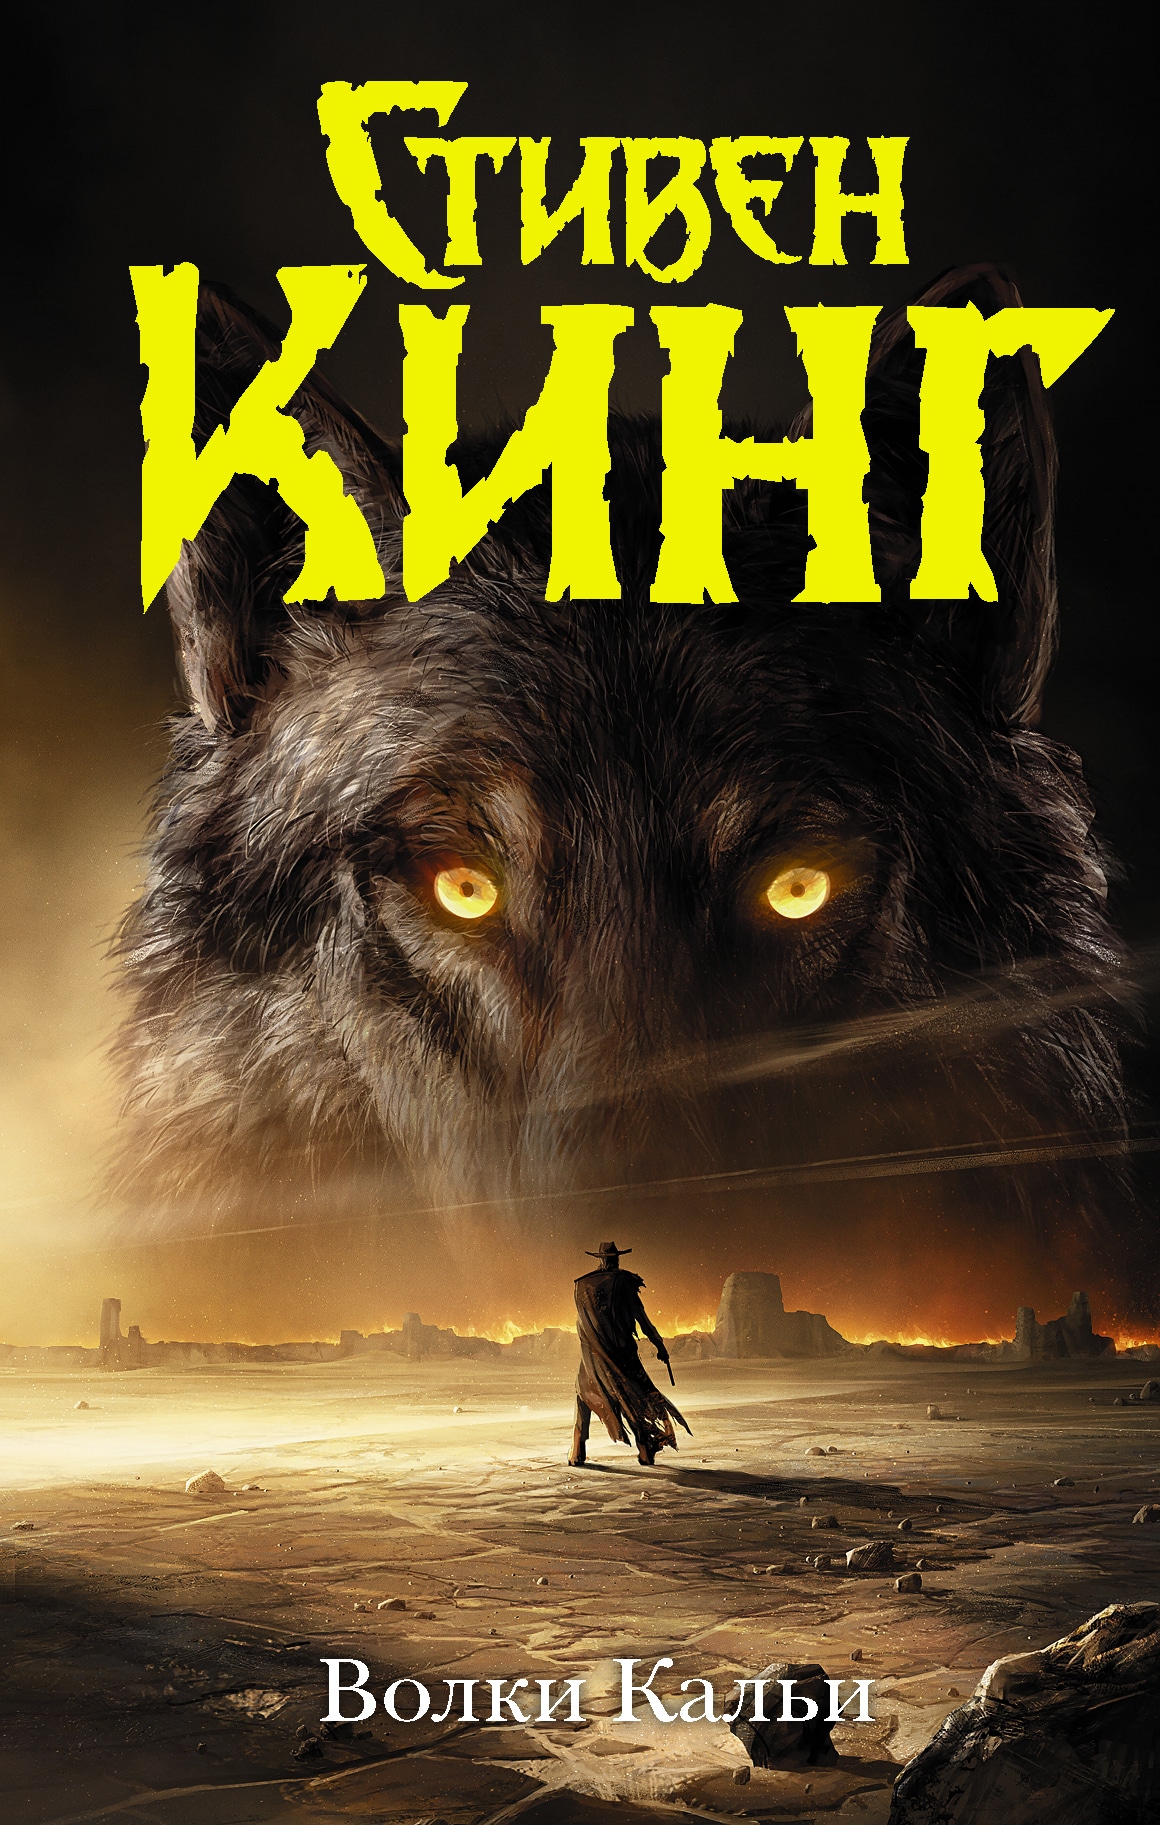 Book “Волки Кальи” by Стивен Кинг — 2022